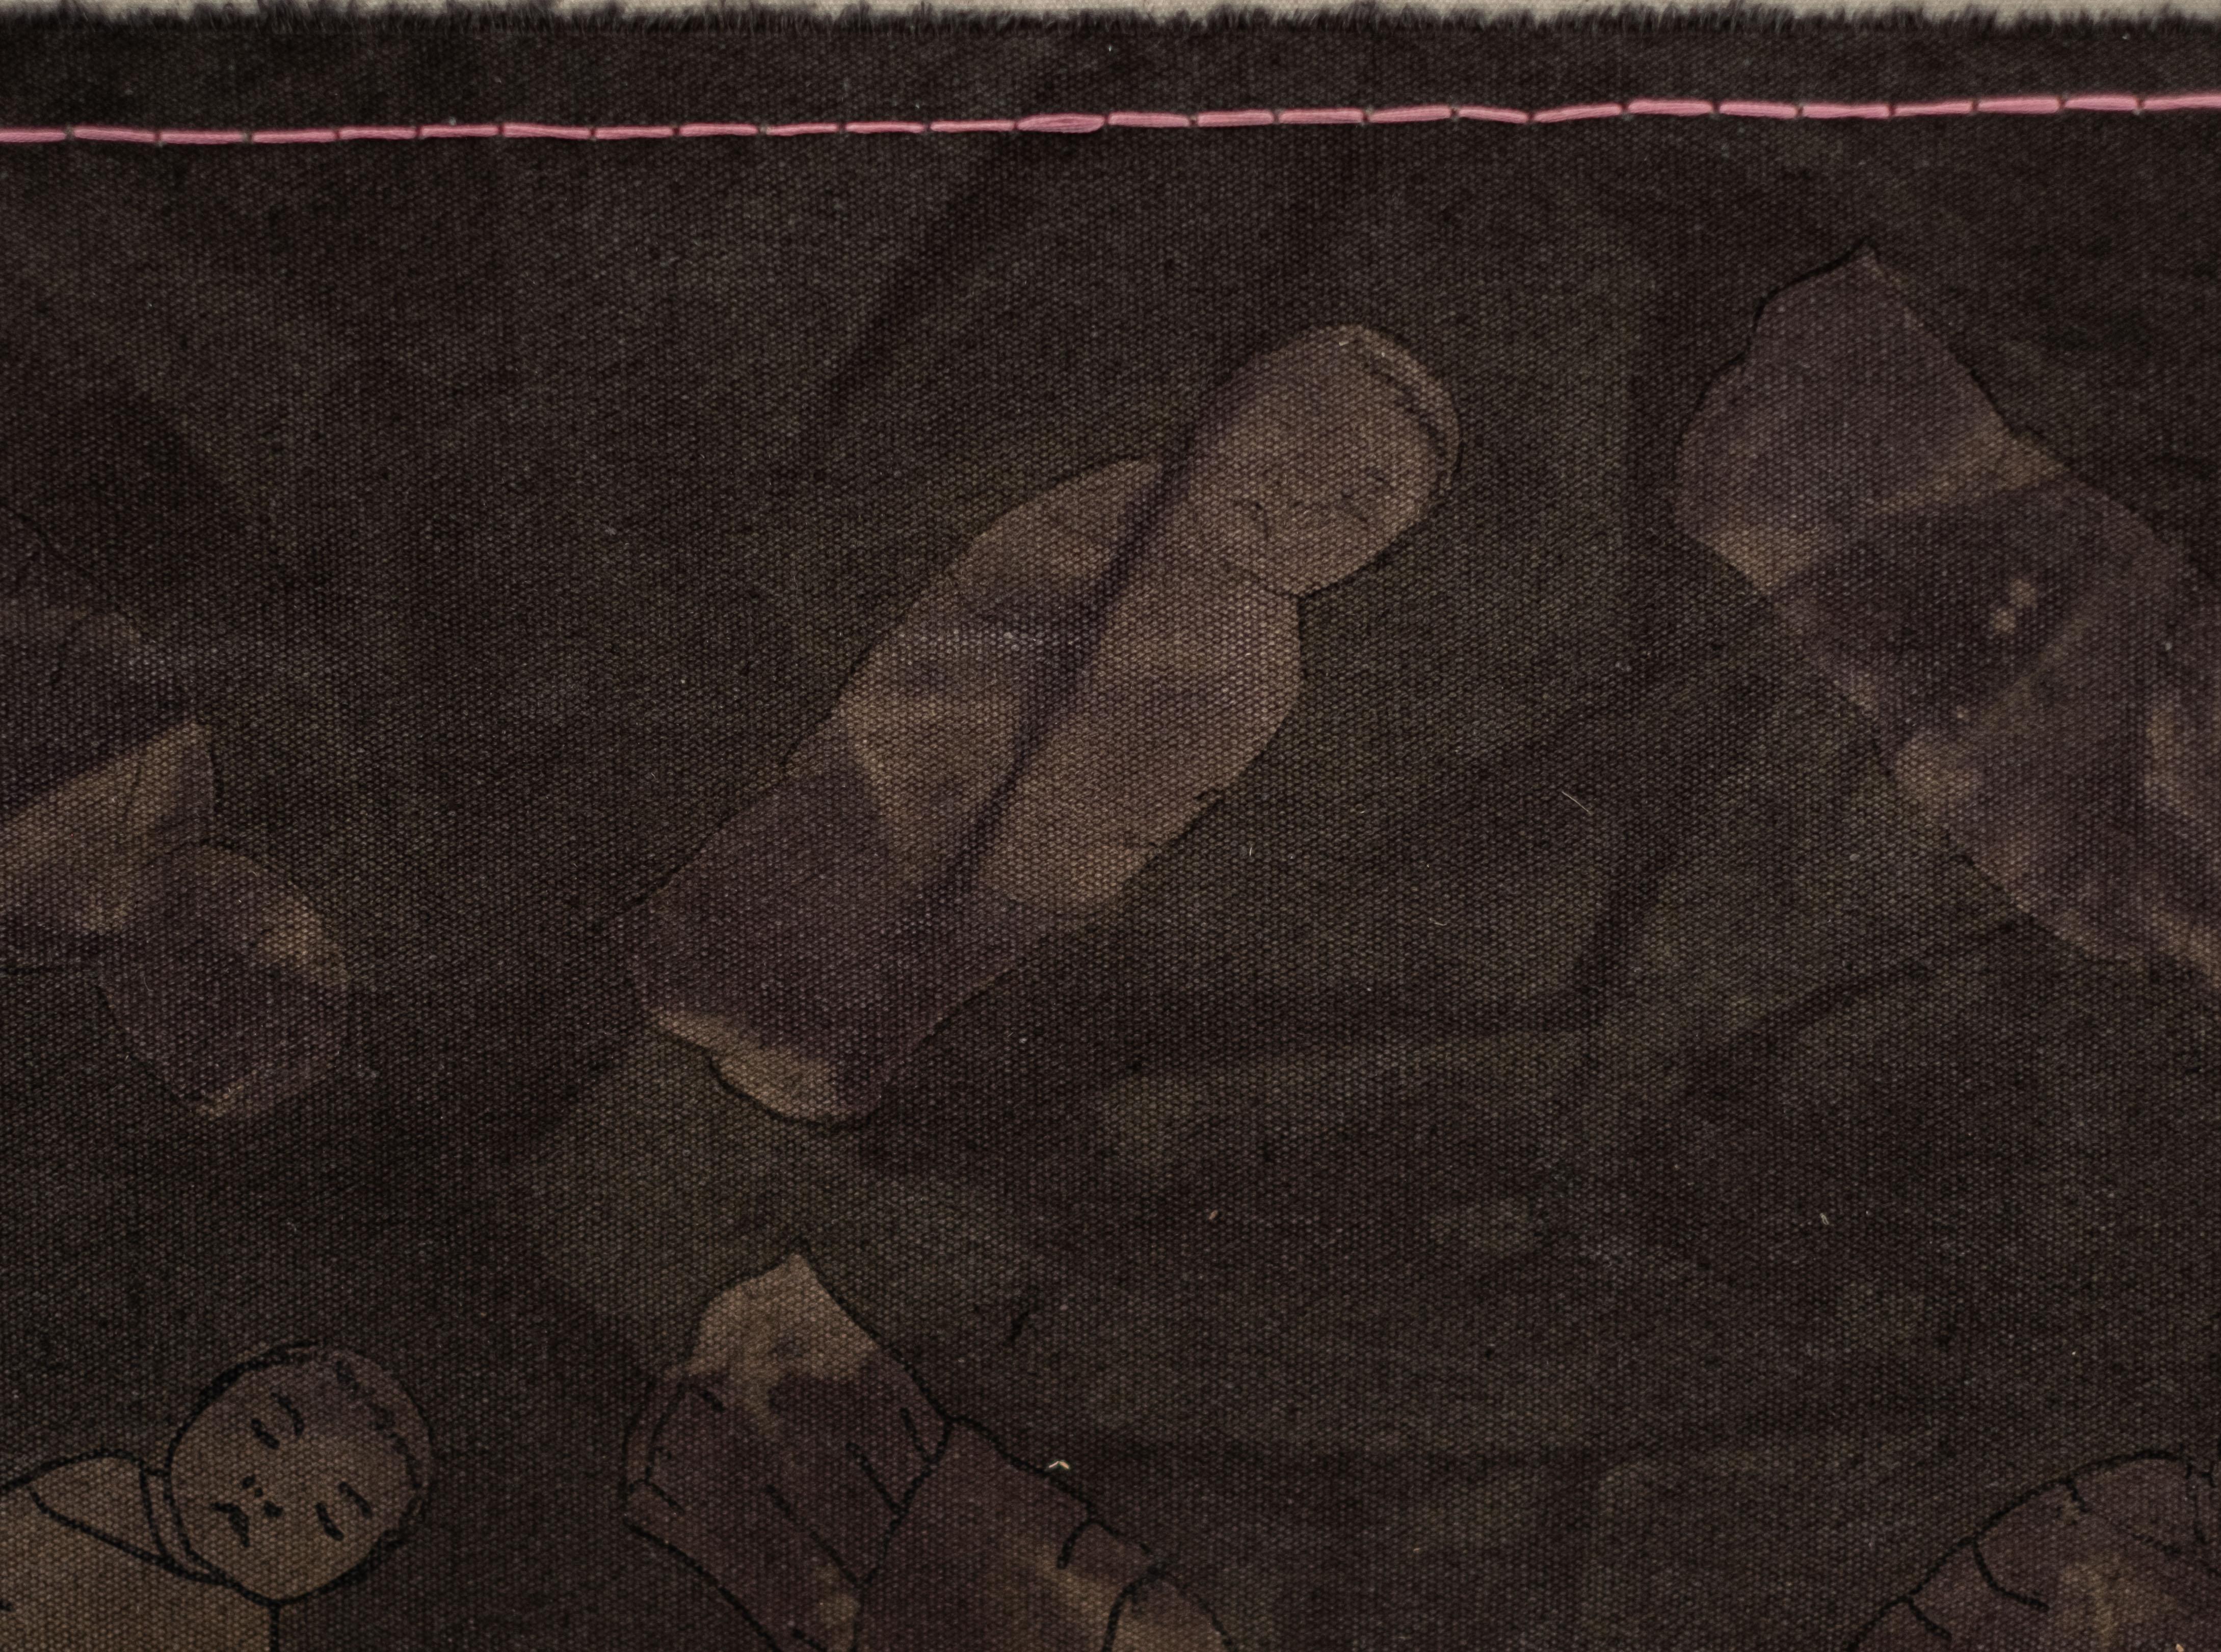 Mule mit transparentem pack und Felsen - farbenfrohes, figuratives Acryl auf Leinwand 2